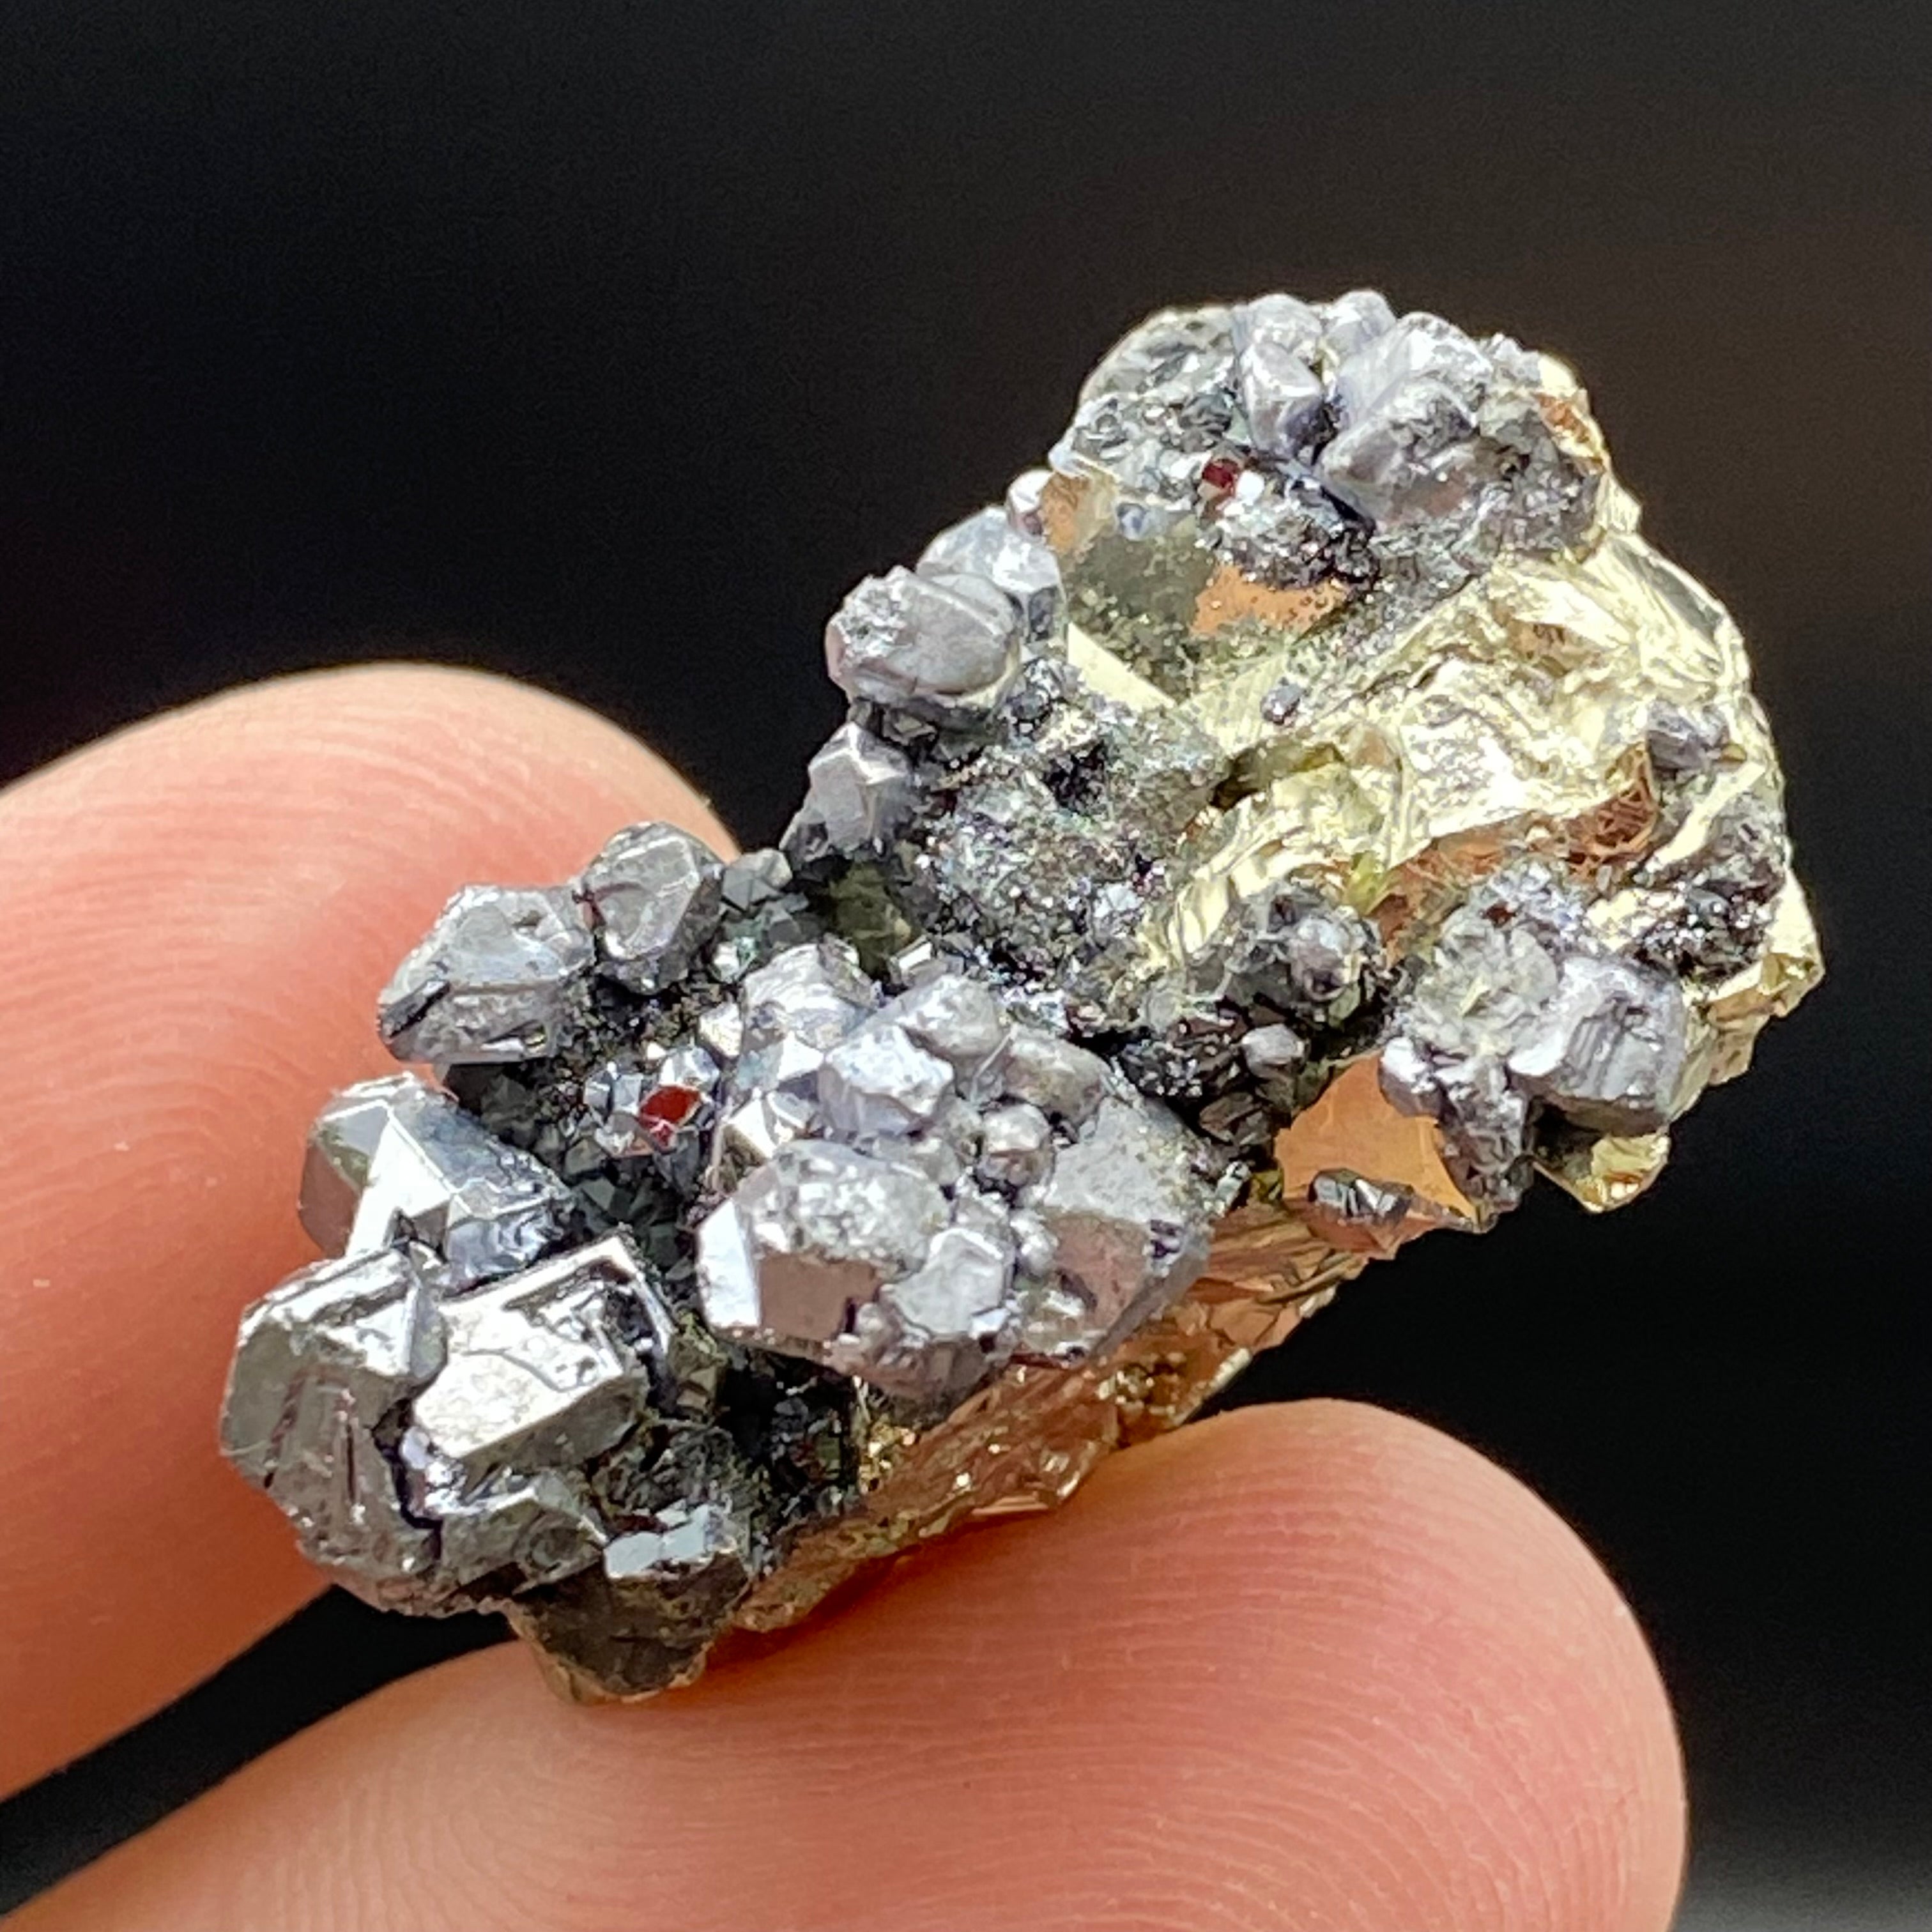 Peruvian Pyrite Crystal - 154